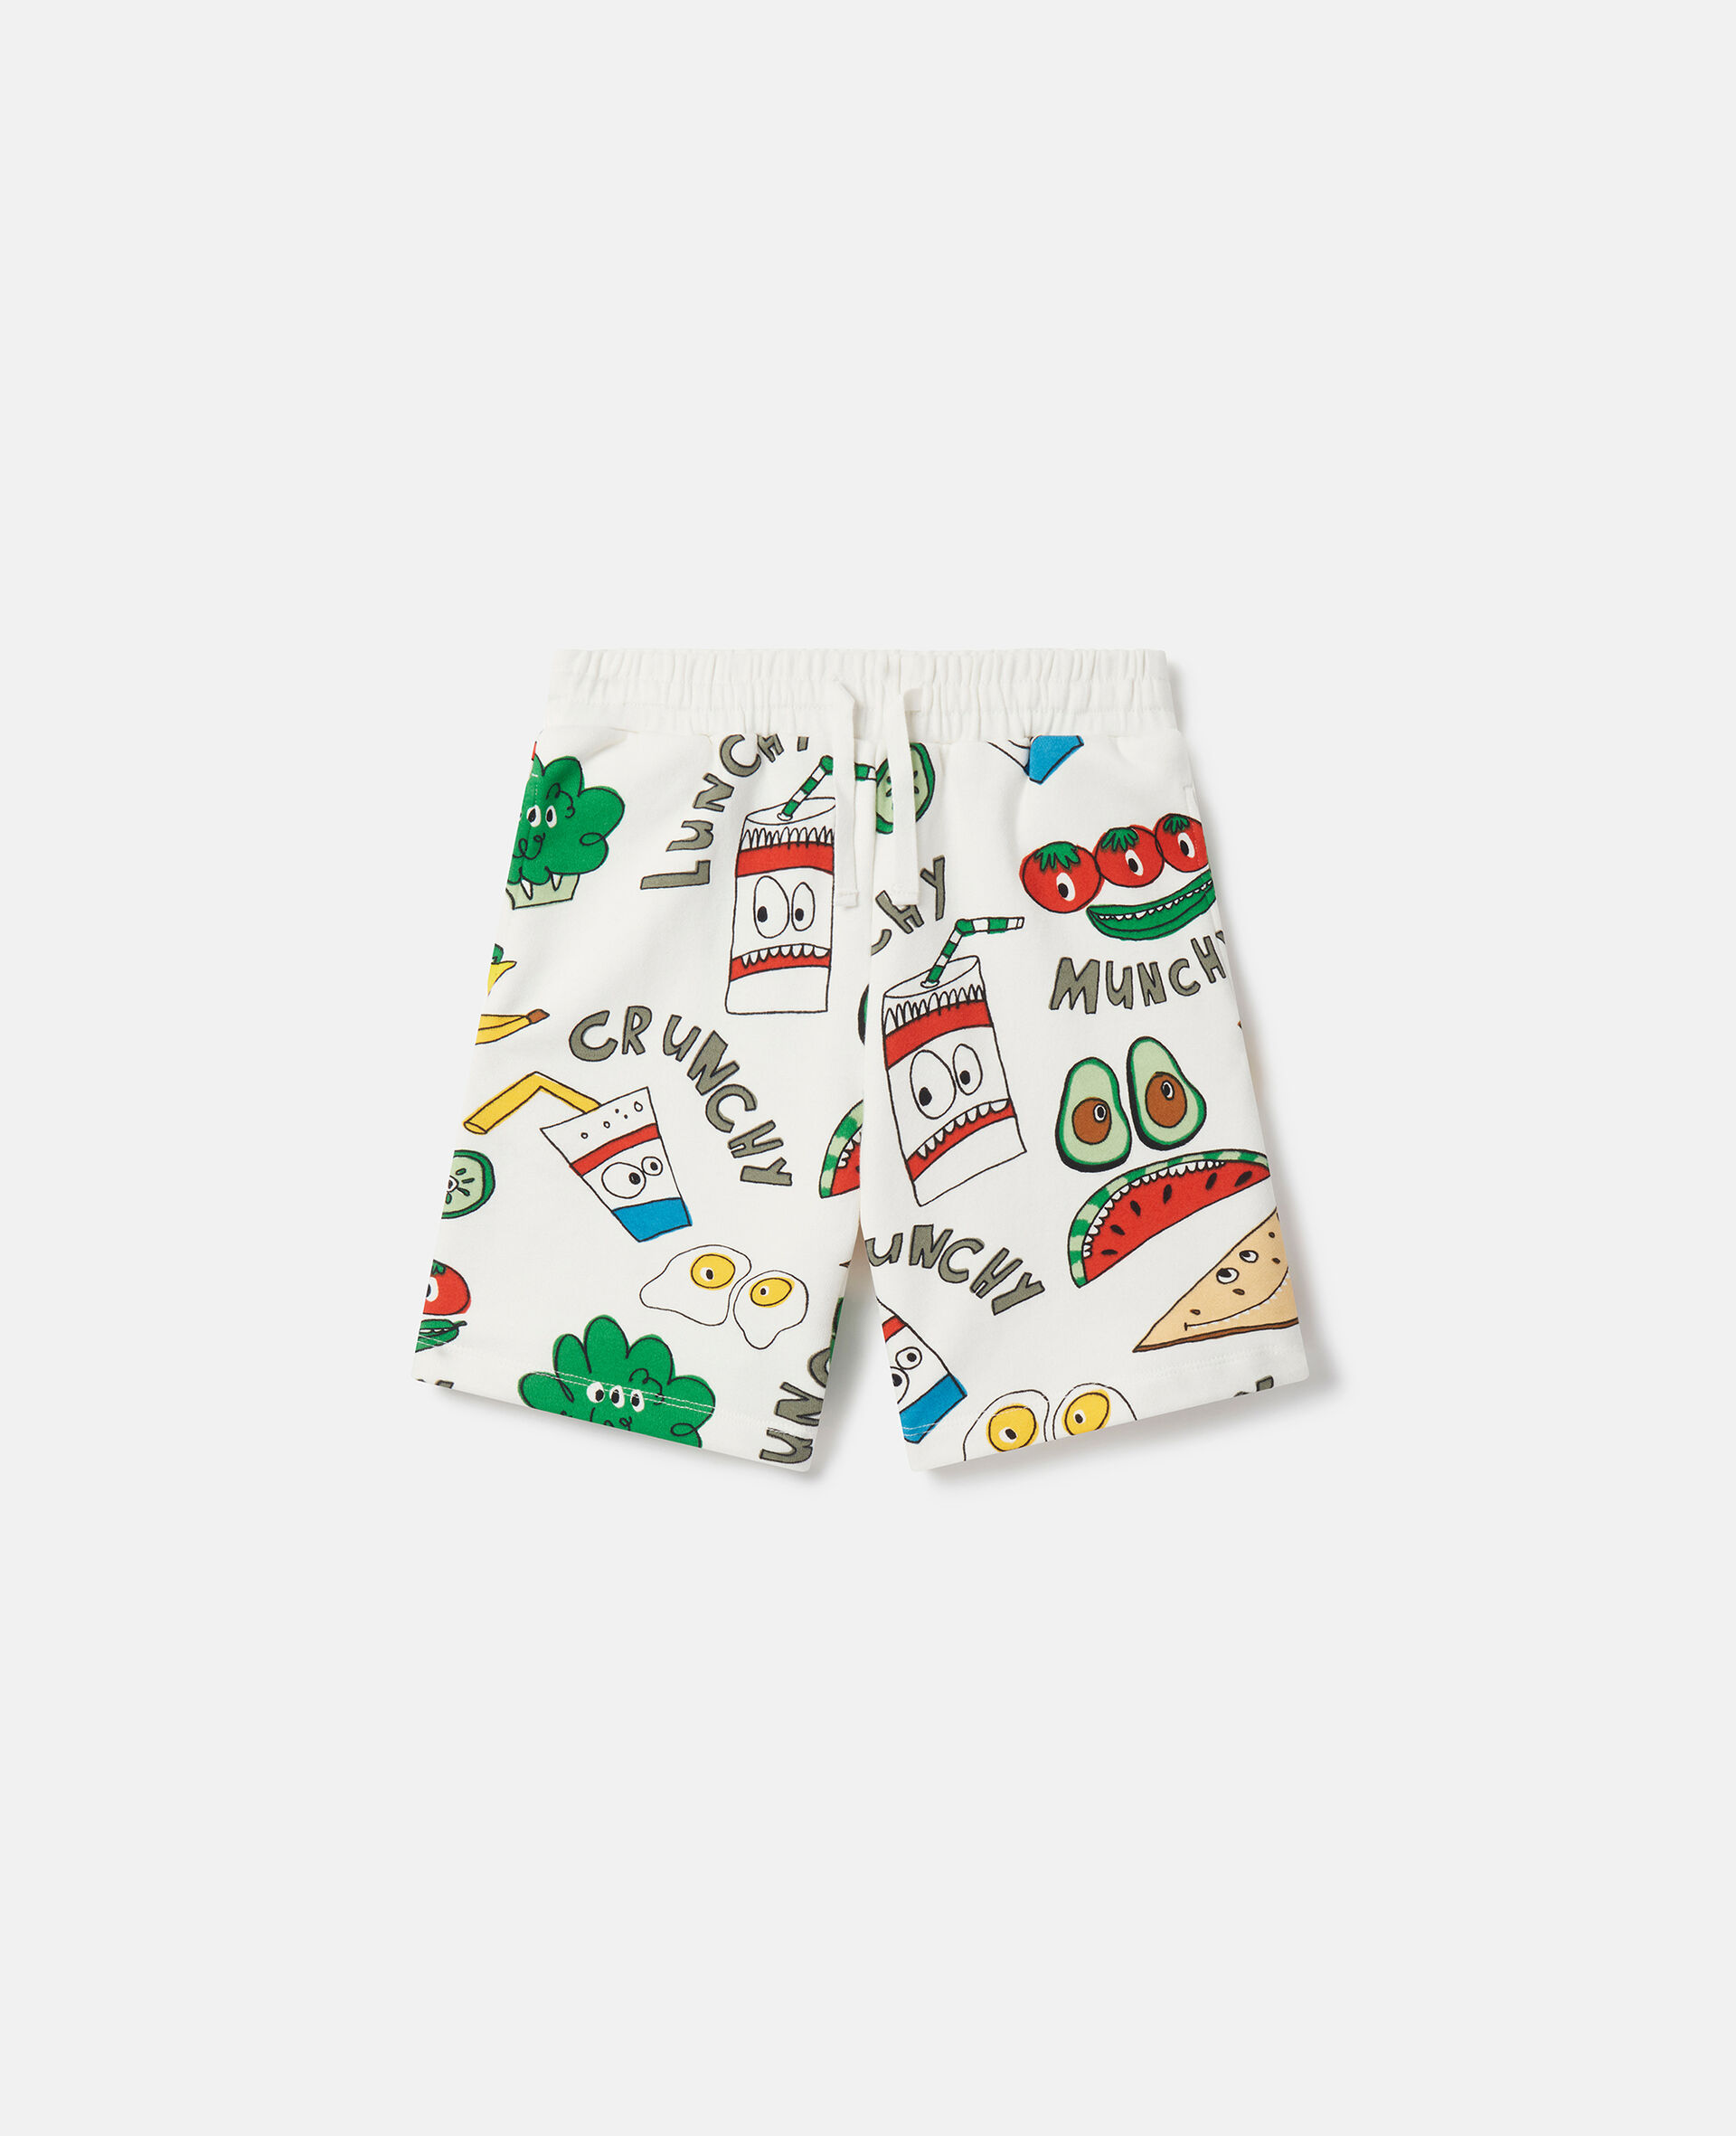 Crunchy Lunchy Print Shorts-Multicolour-medium